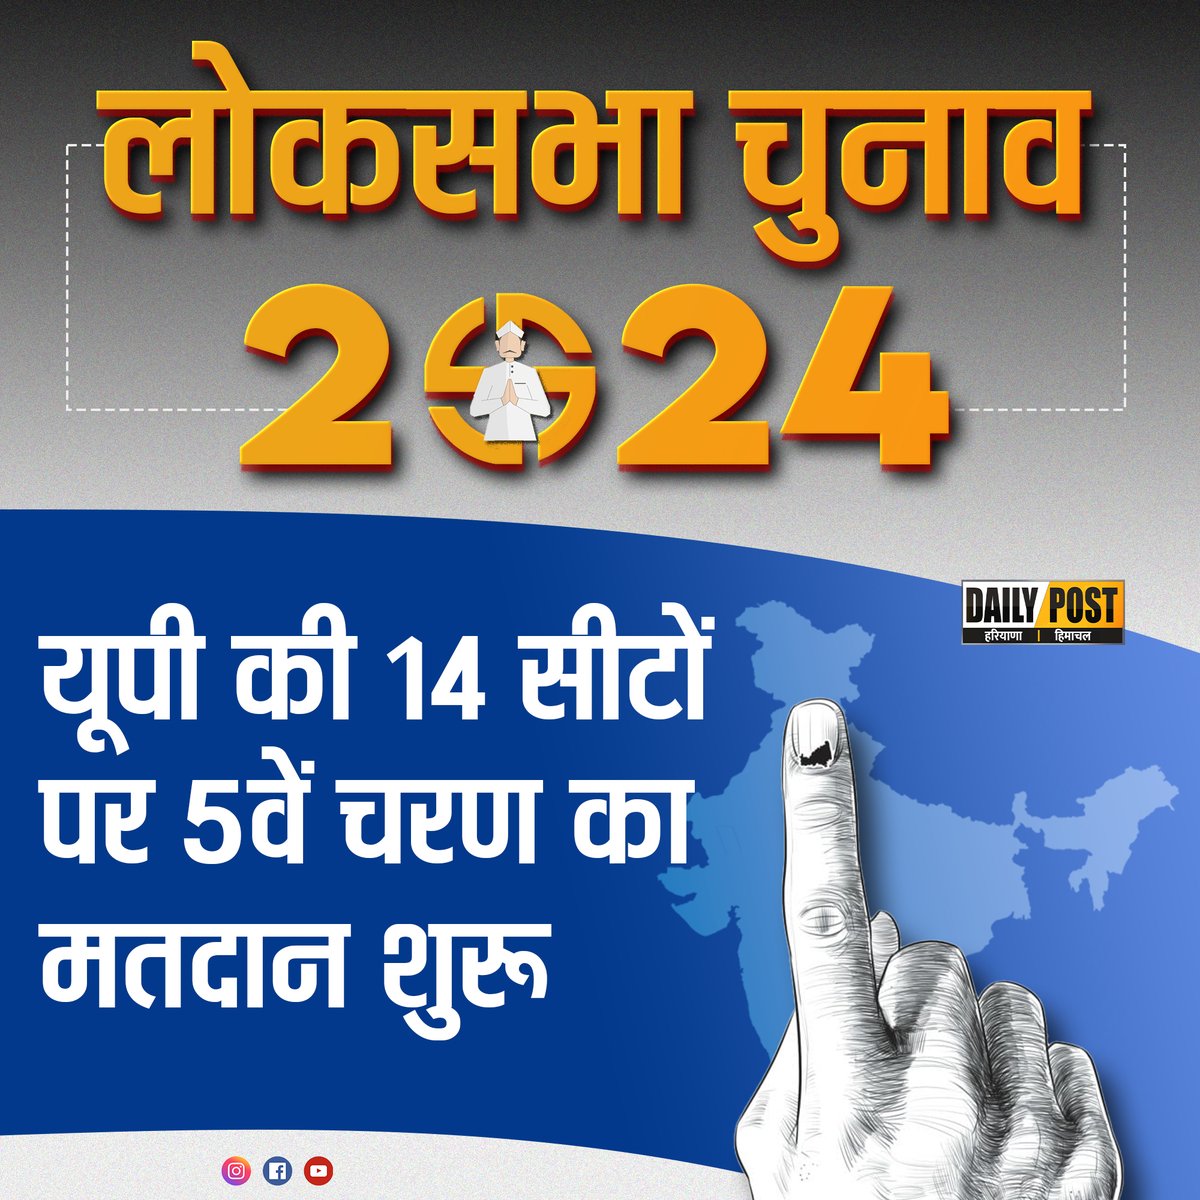 #election #election2024 #voting #trending #viral #reel #khabar #dailypost #uttarpradesh #up